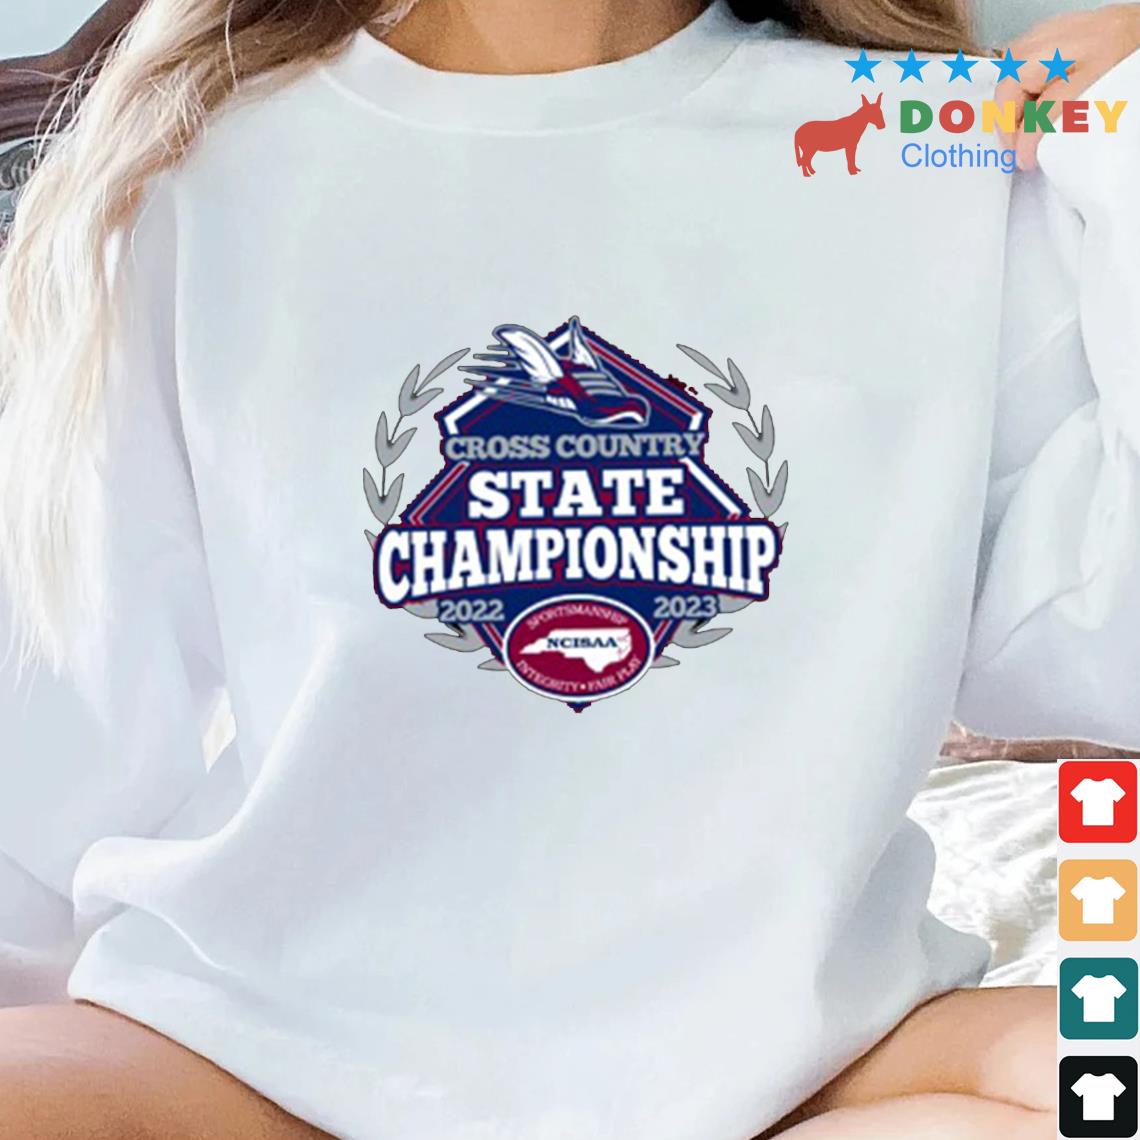 NCISAA Cross Country State Championshop 2022 2023 Shirt